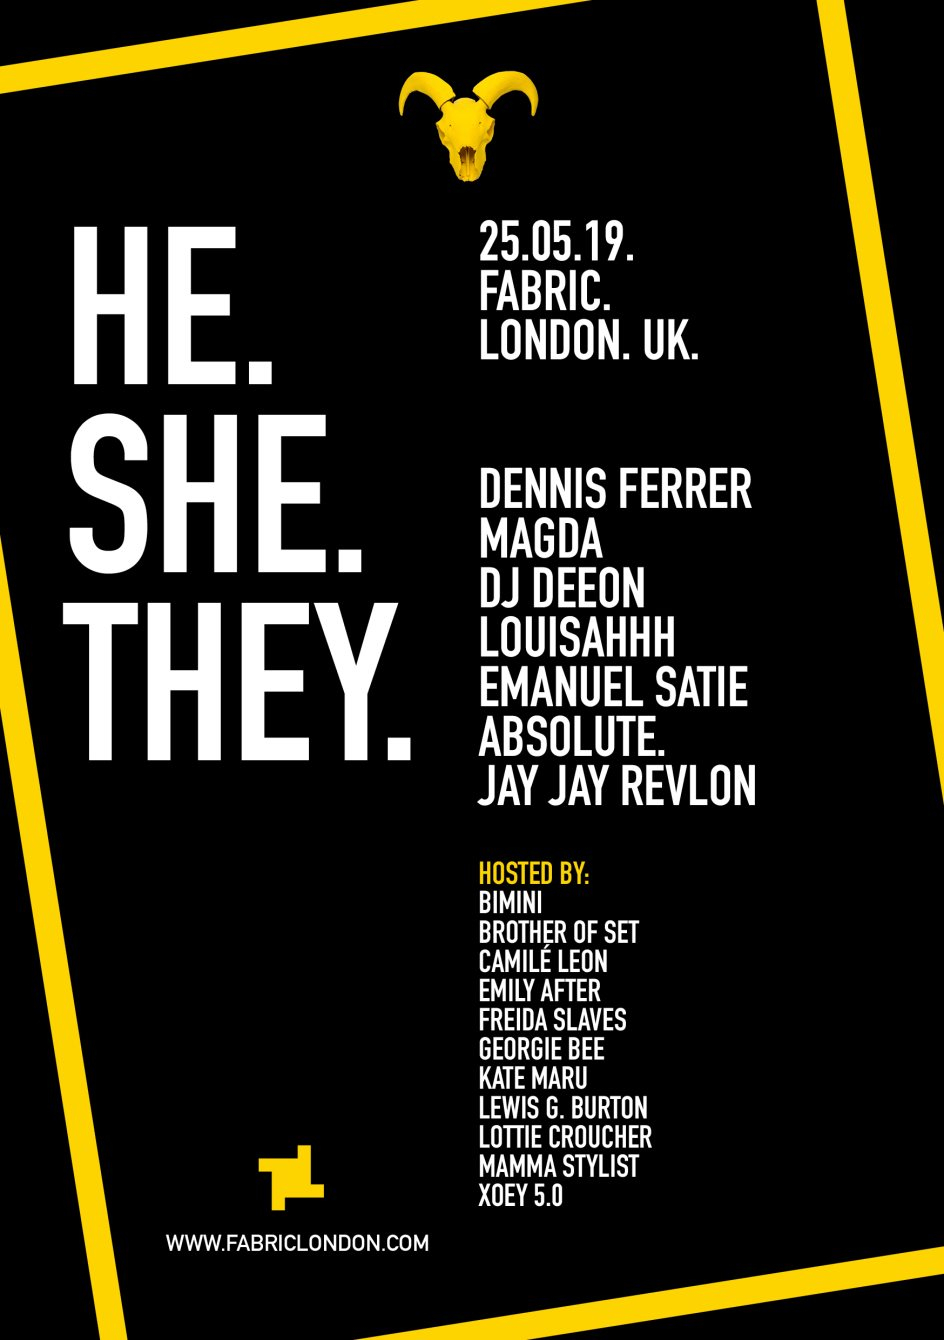 He.She.They with Dennis Ferrer, Magda, DJ Deeon & Emanuel Satie - Flyer back